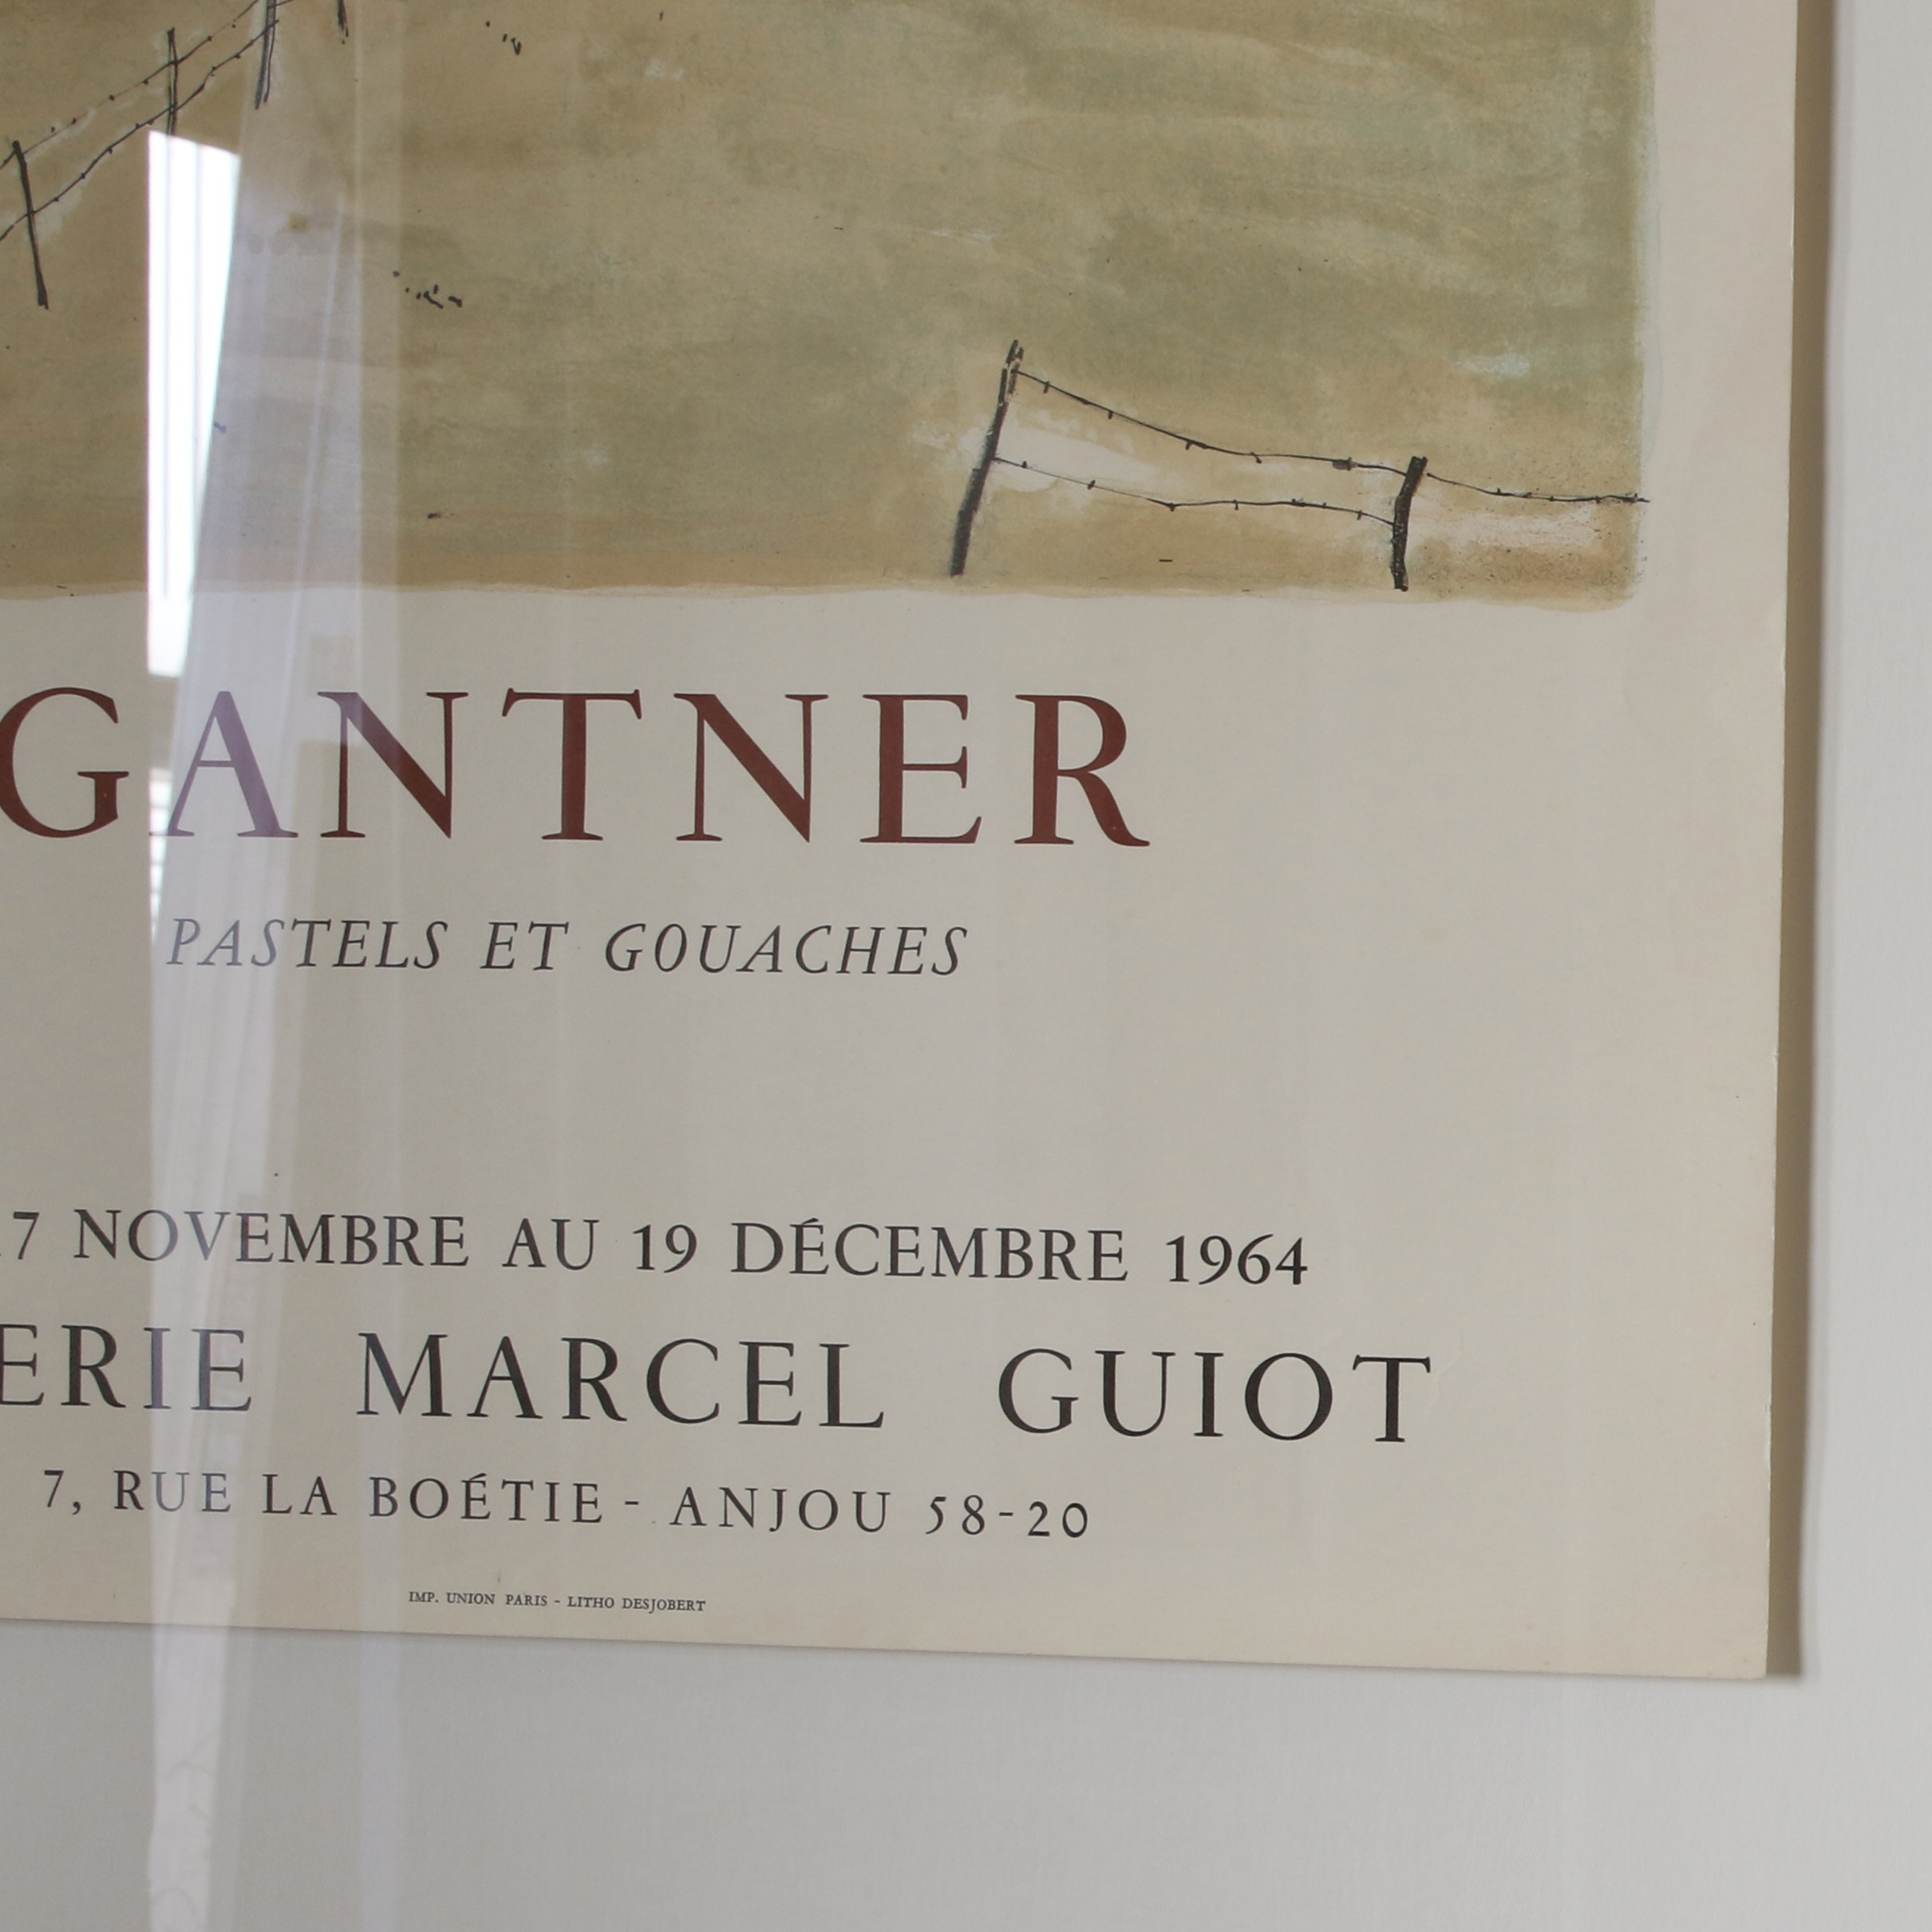 French Poster for Gantner Exhibition